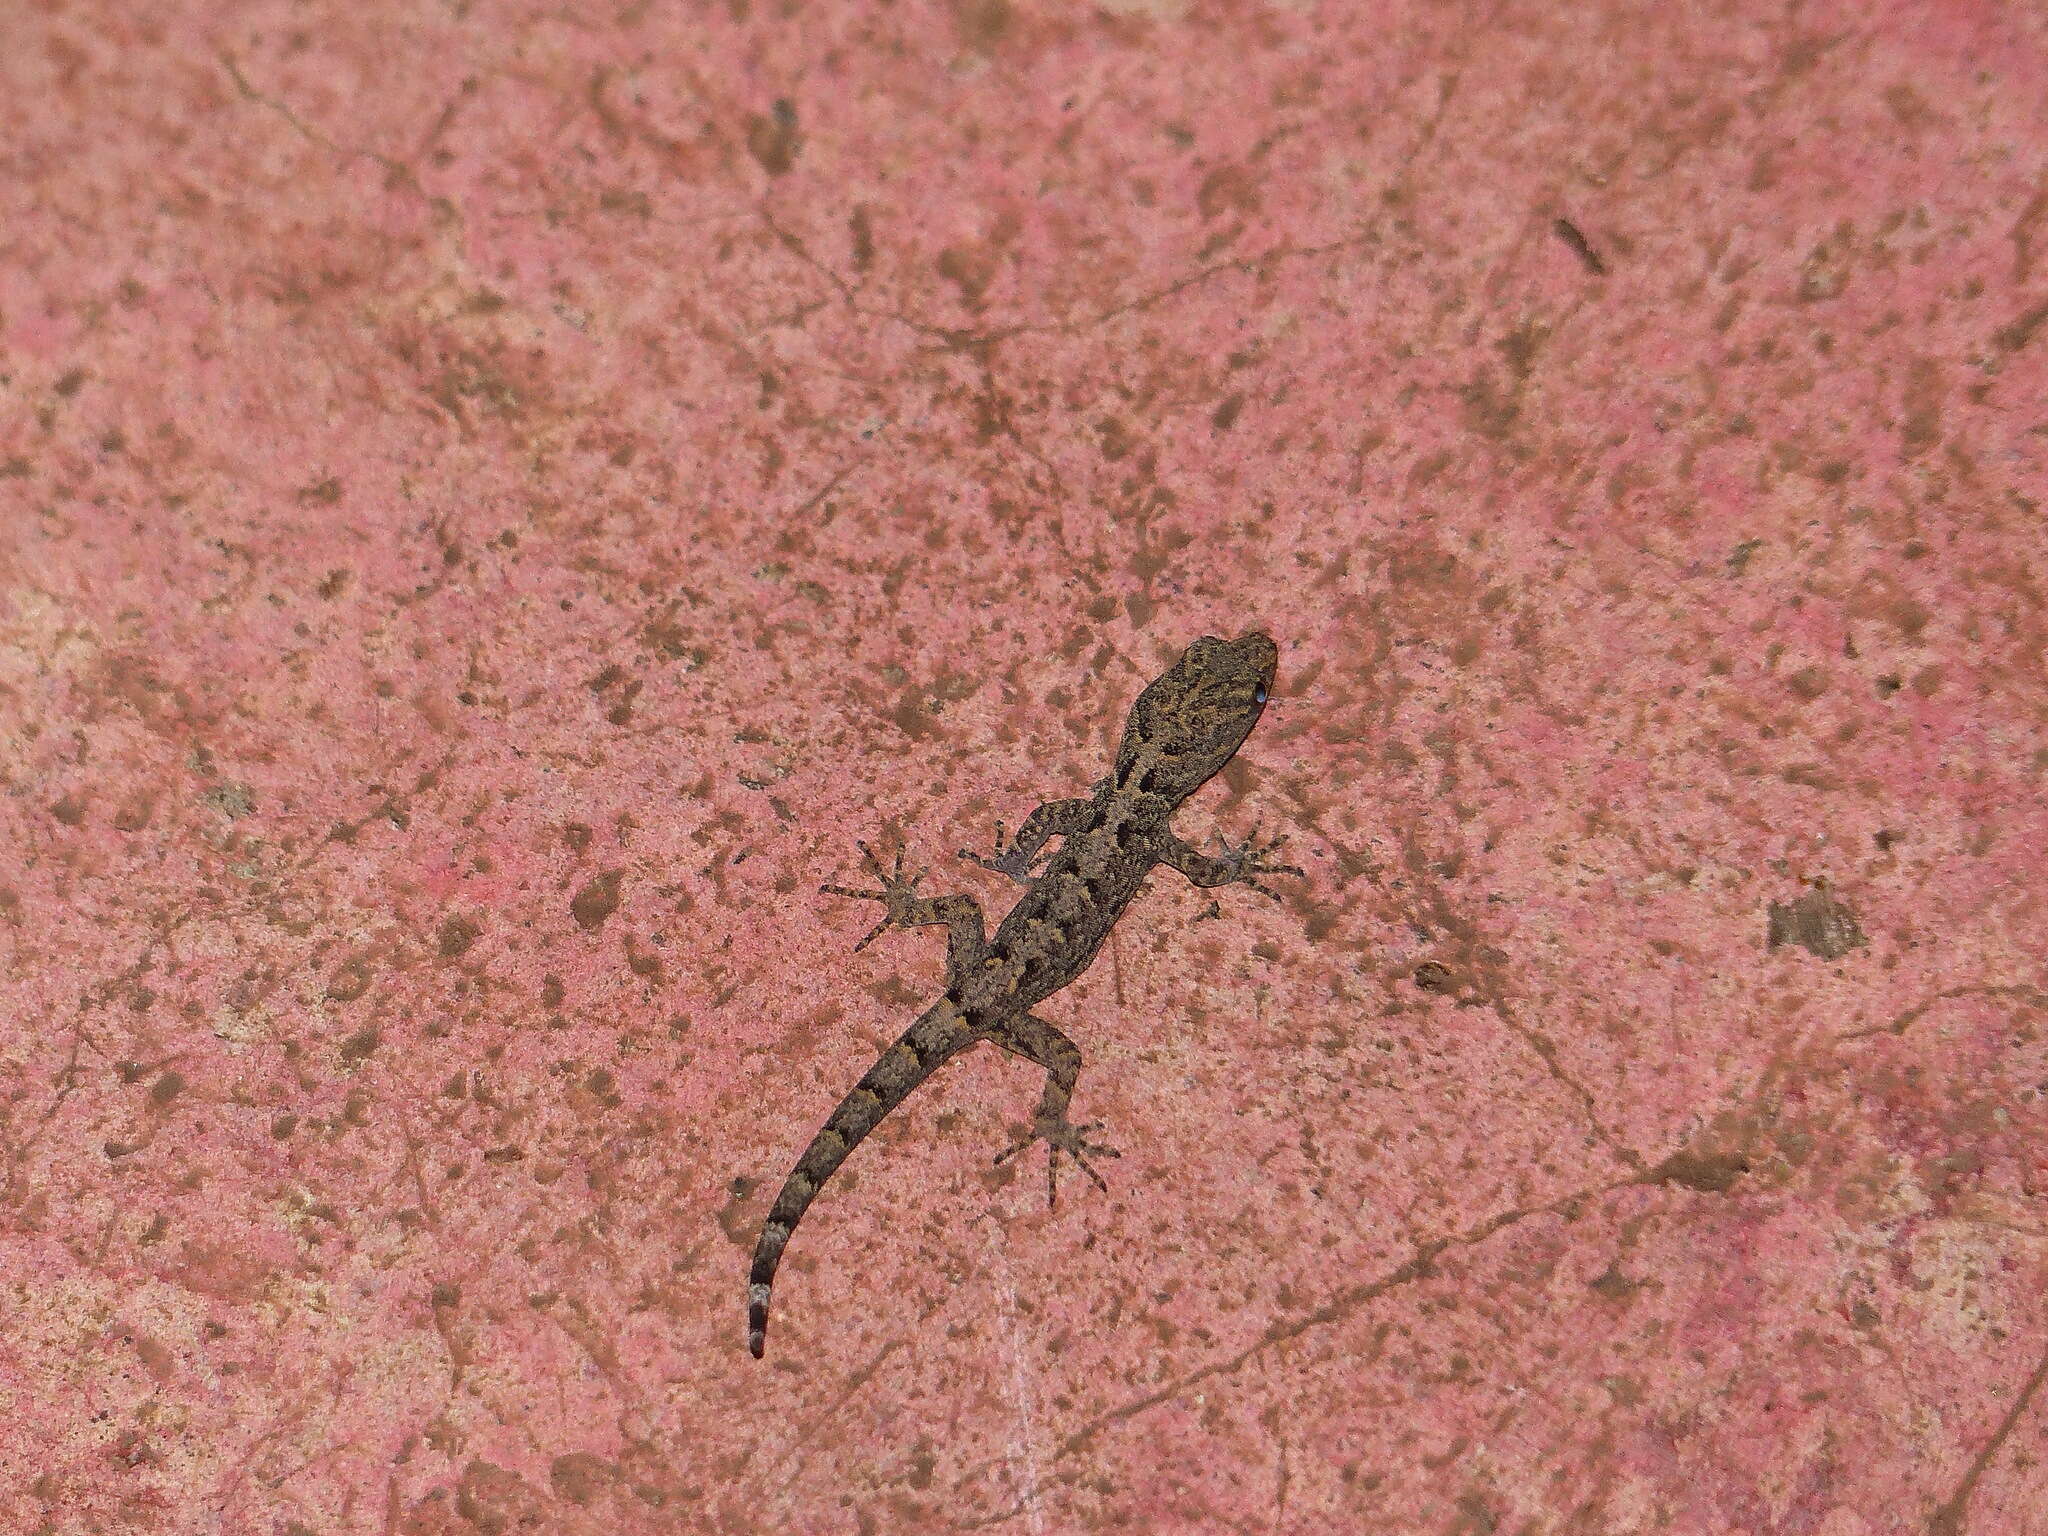 Image of Shieldhead Gecko